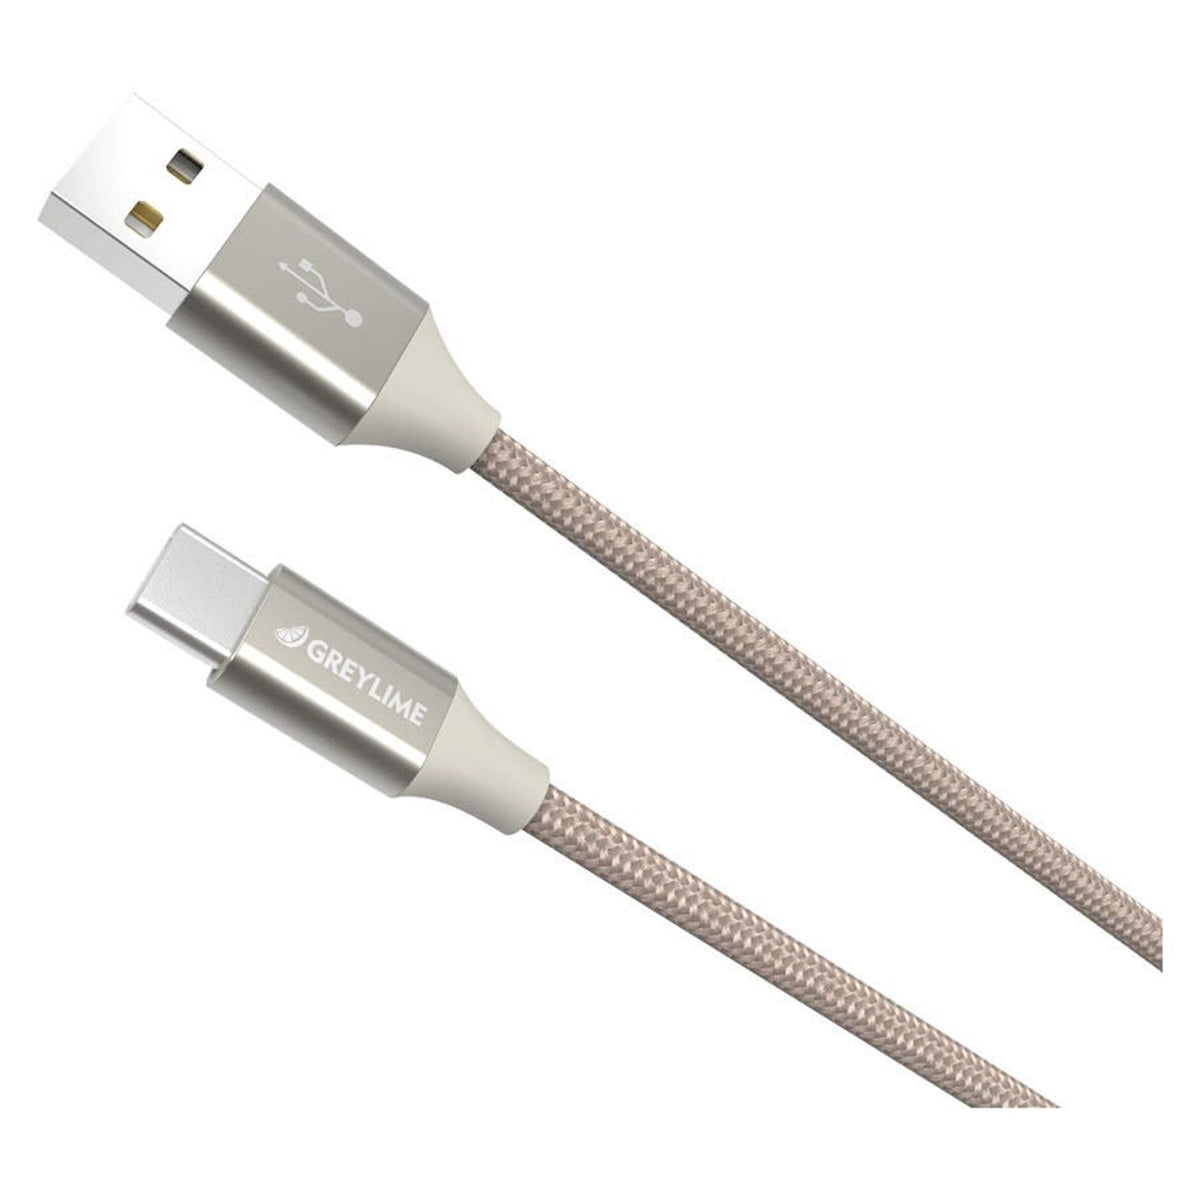 C21AC1M02-GreyLime-Braided-USB-A-to-USB-C-Cable-Beige-1-m_02.jpg